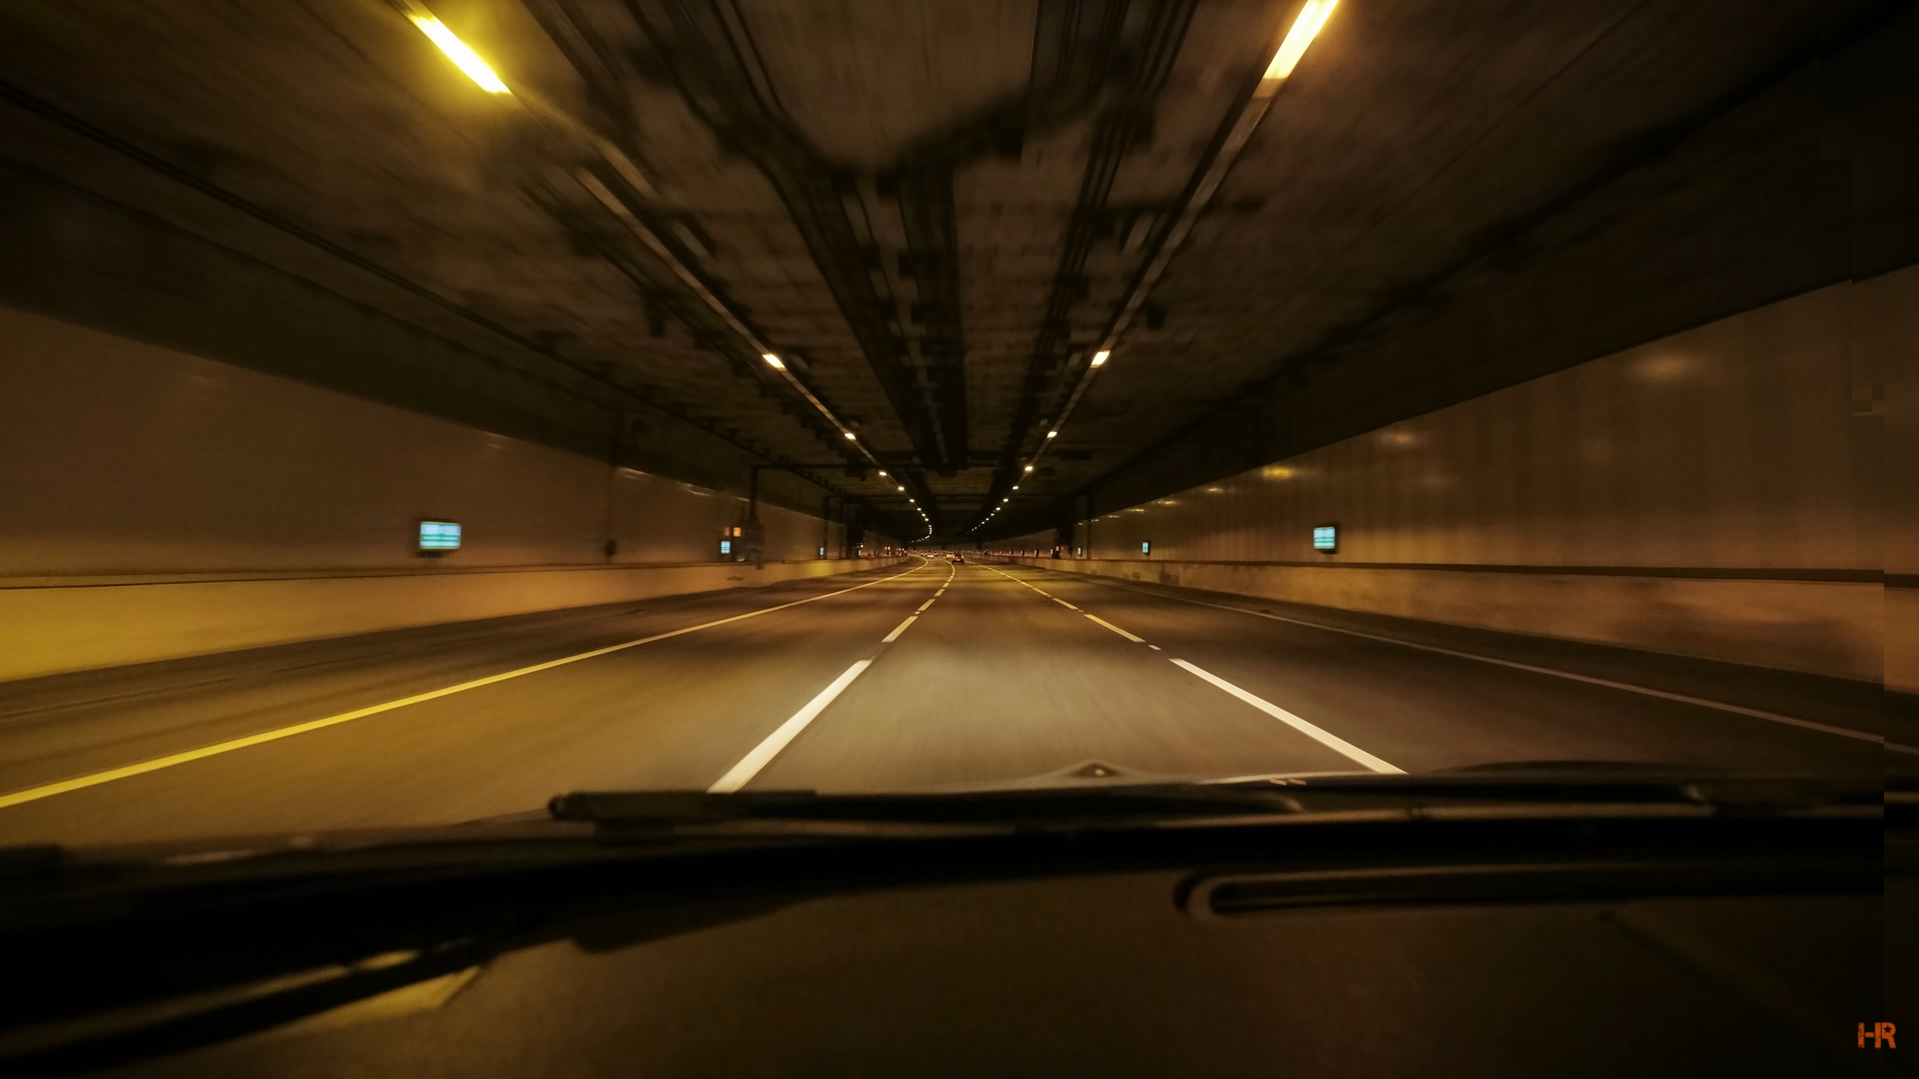 A car drives through an amber lit tunnel.